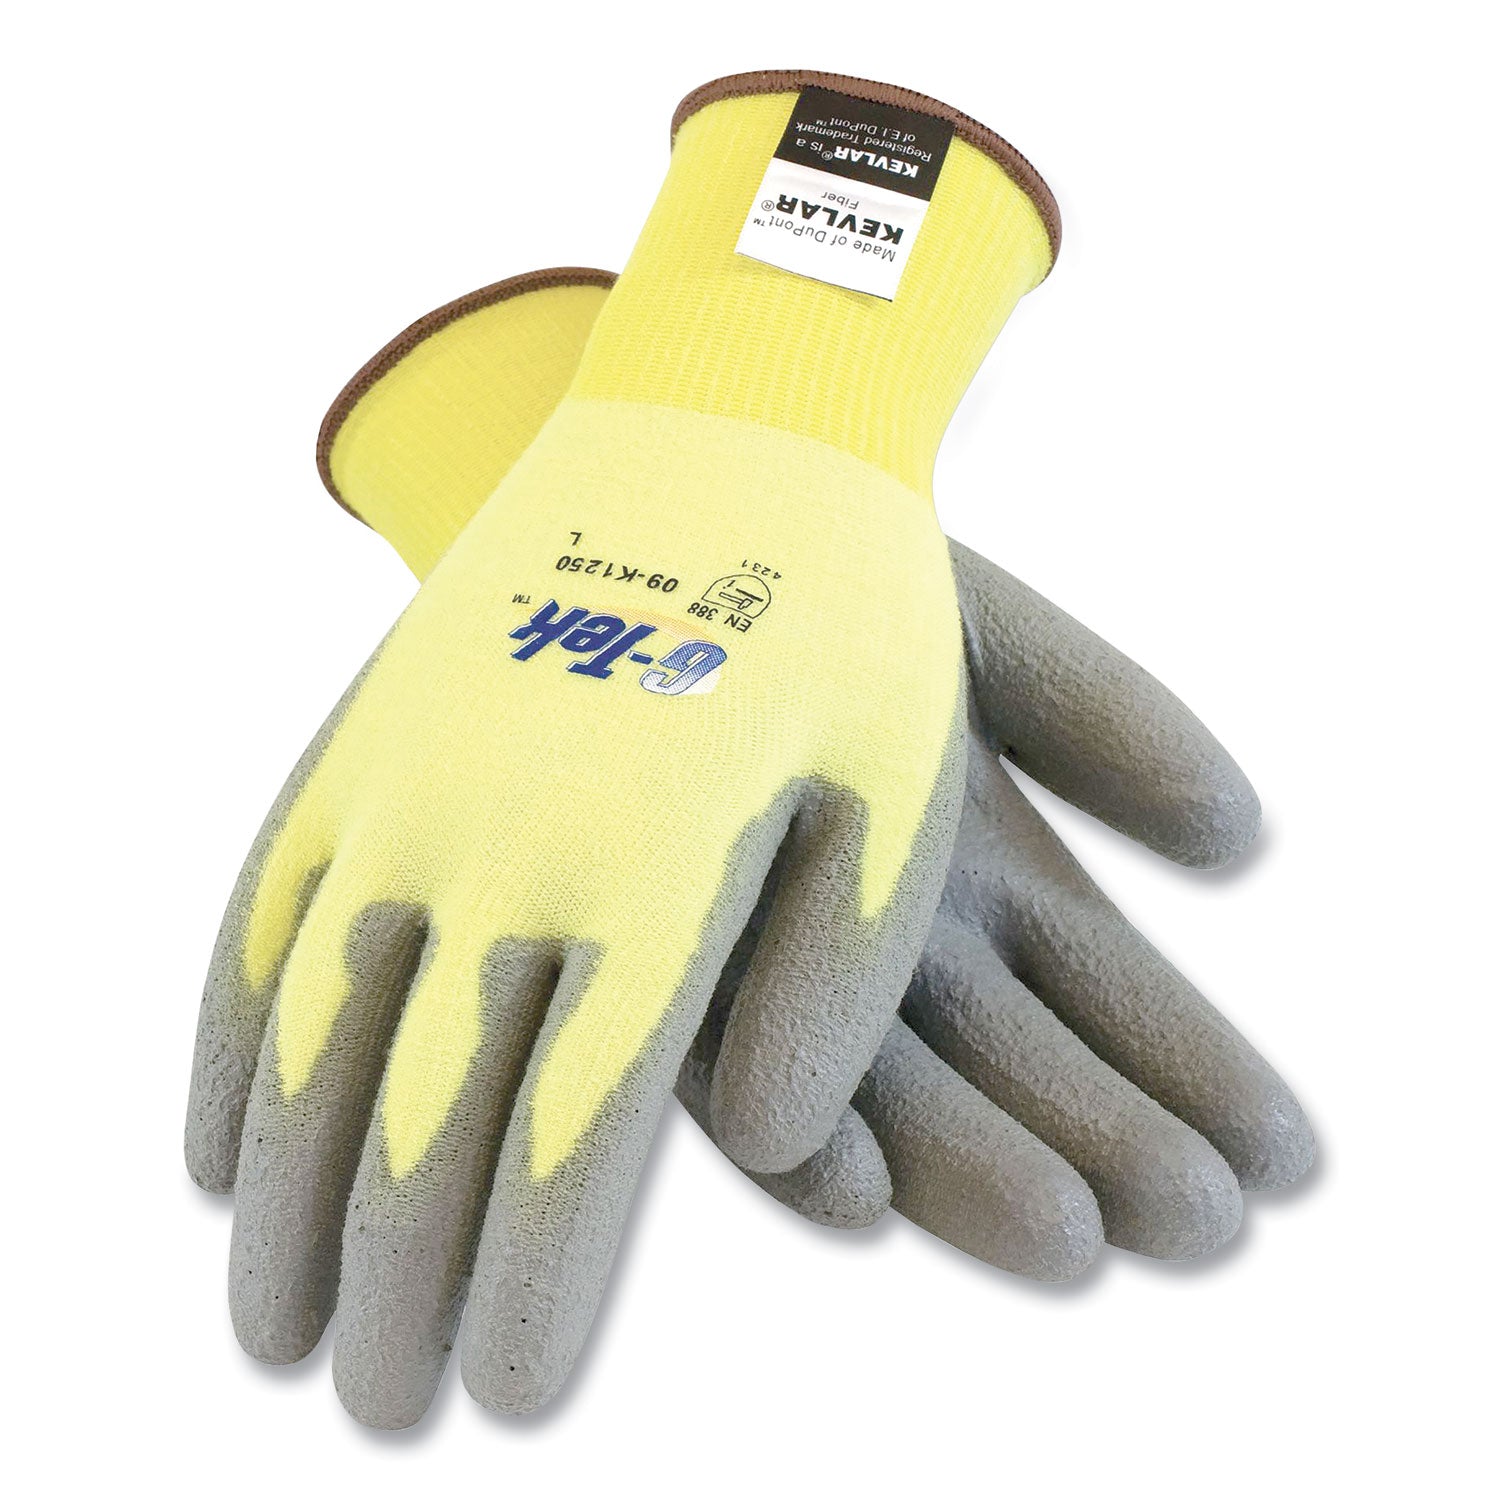 g-tek-kev-cut-resistant-seamless-knit-gloves-medium-size-8-yellow-gray-12-pairs_pid09k1250m - 1